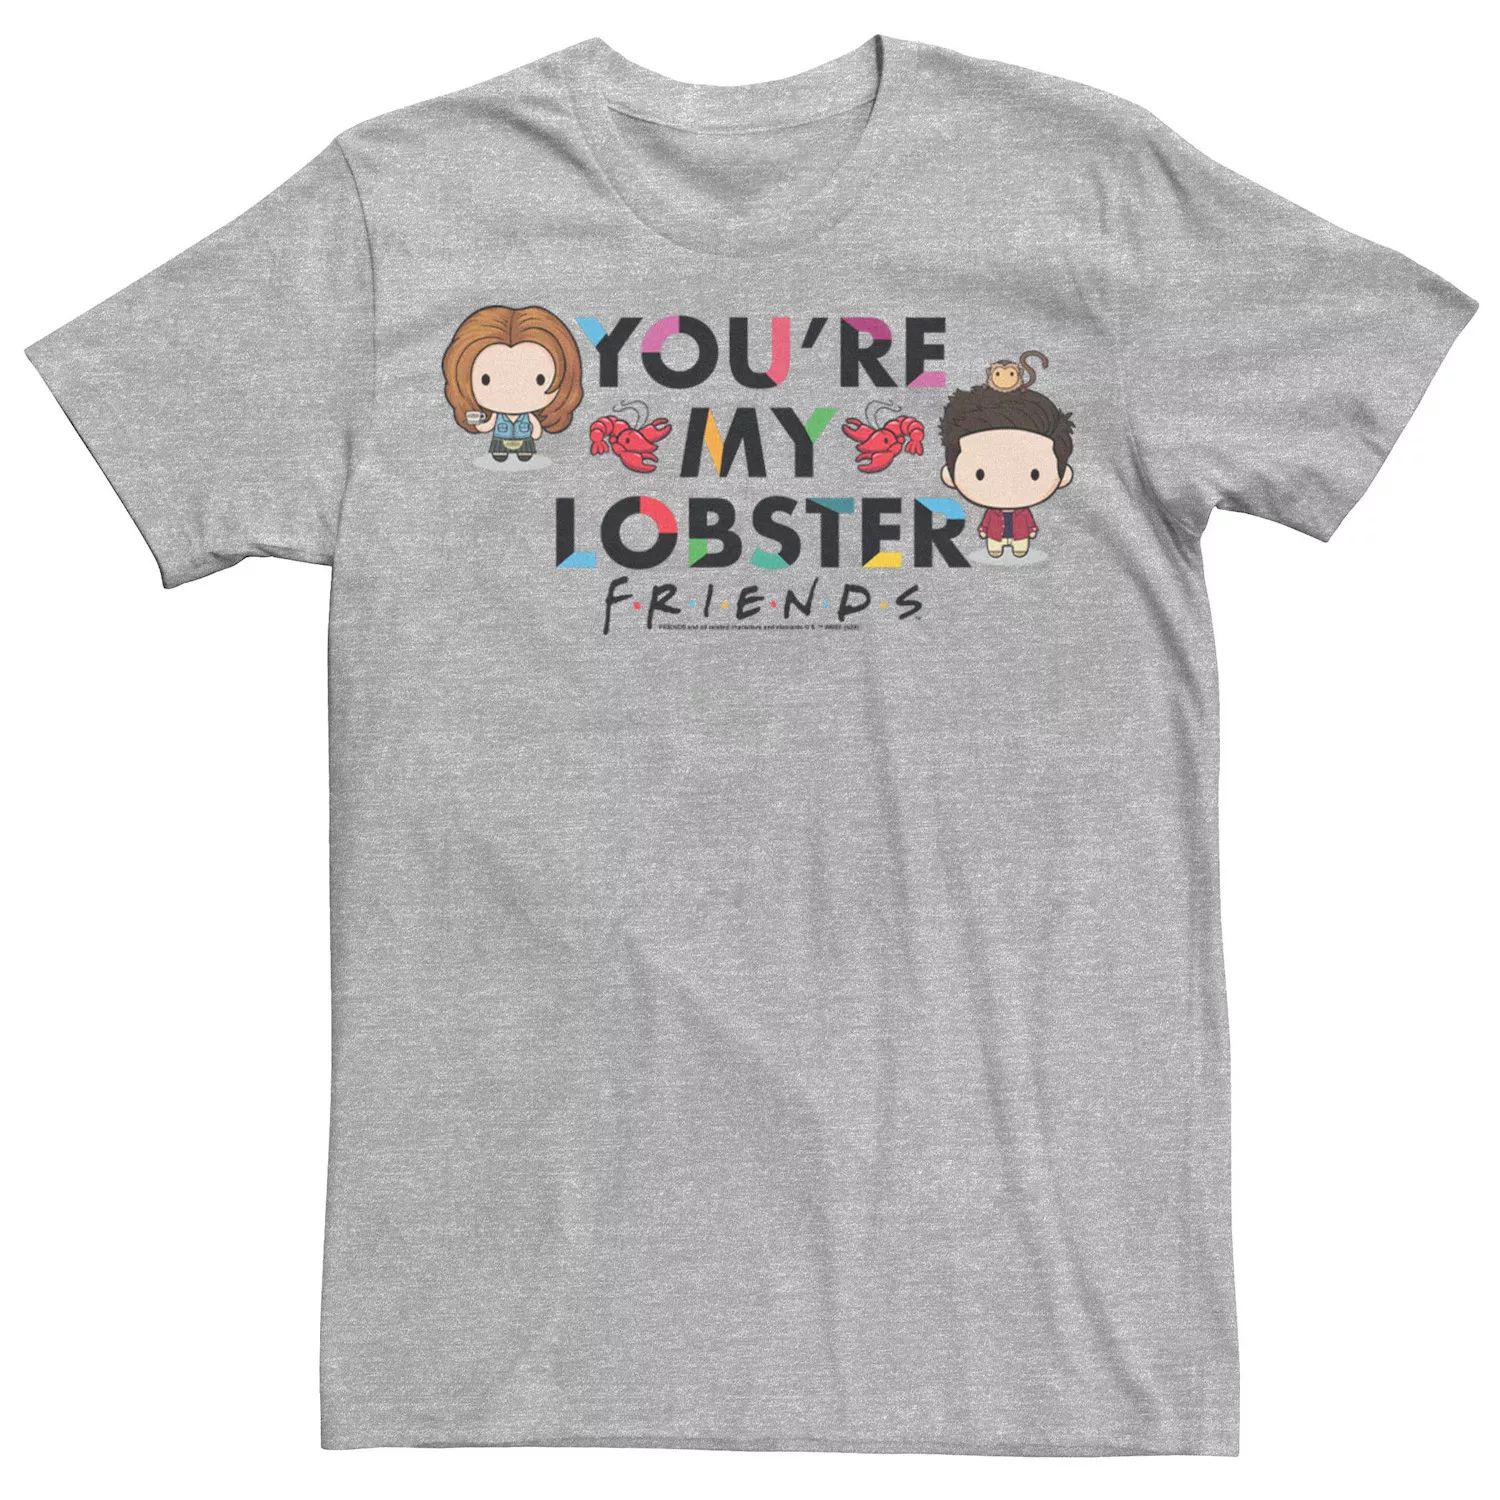 Мужская футболка с рисунком «Ты мой лобстер» в стиле чиби Friends You're My Lobster Licensed Character